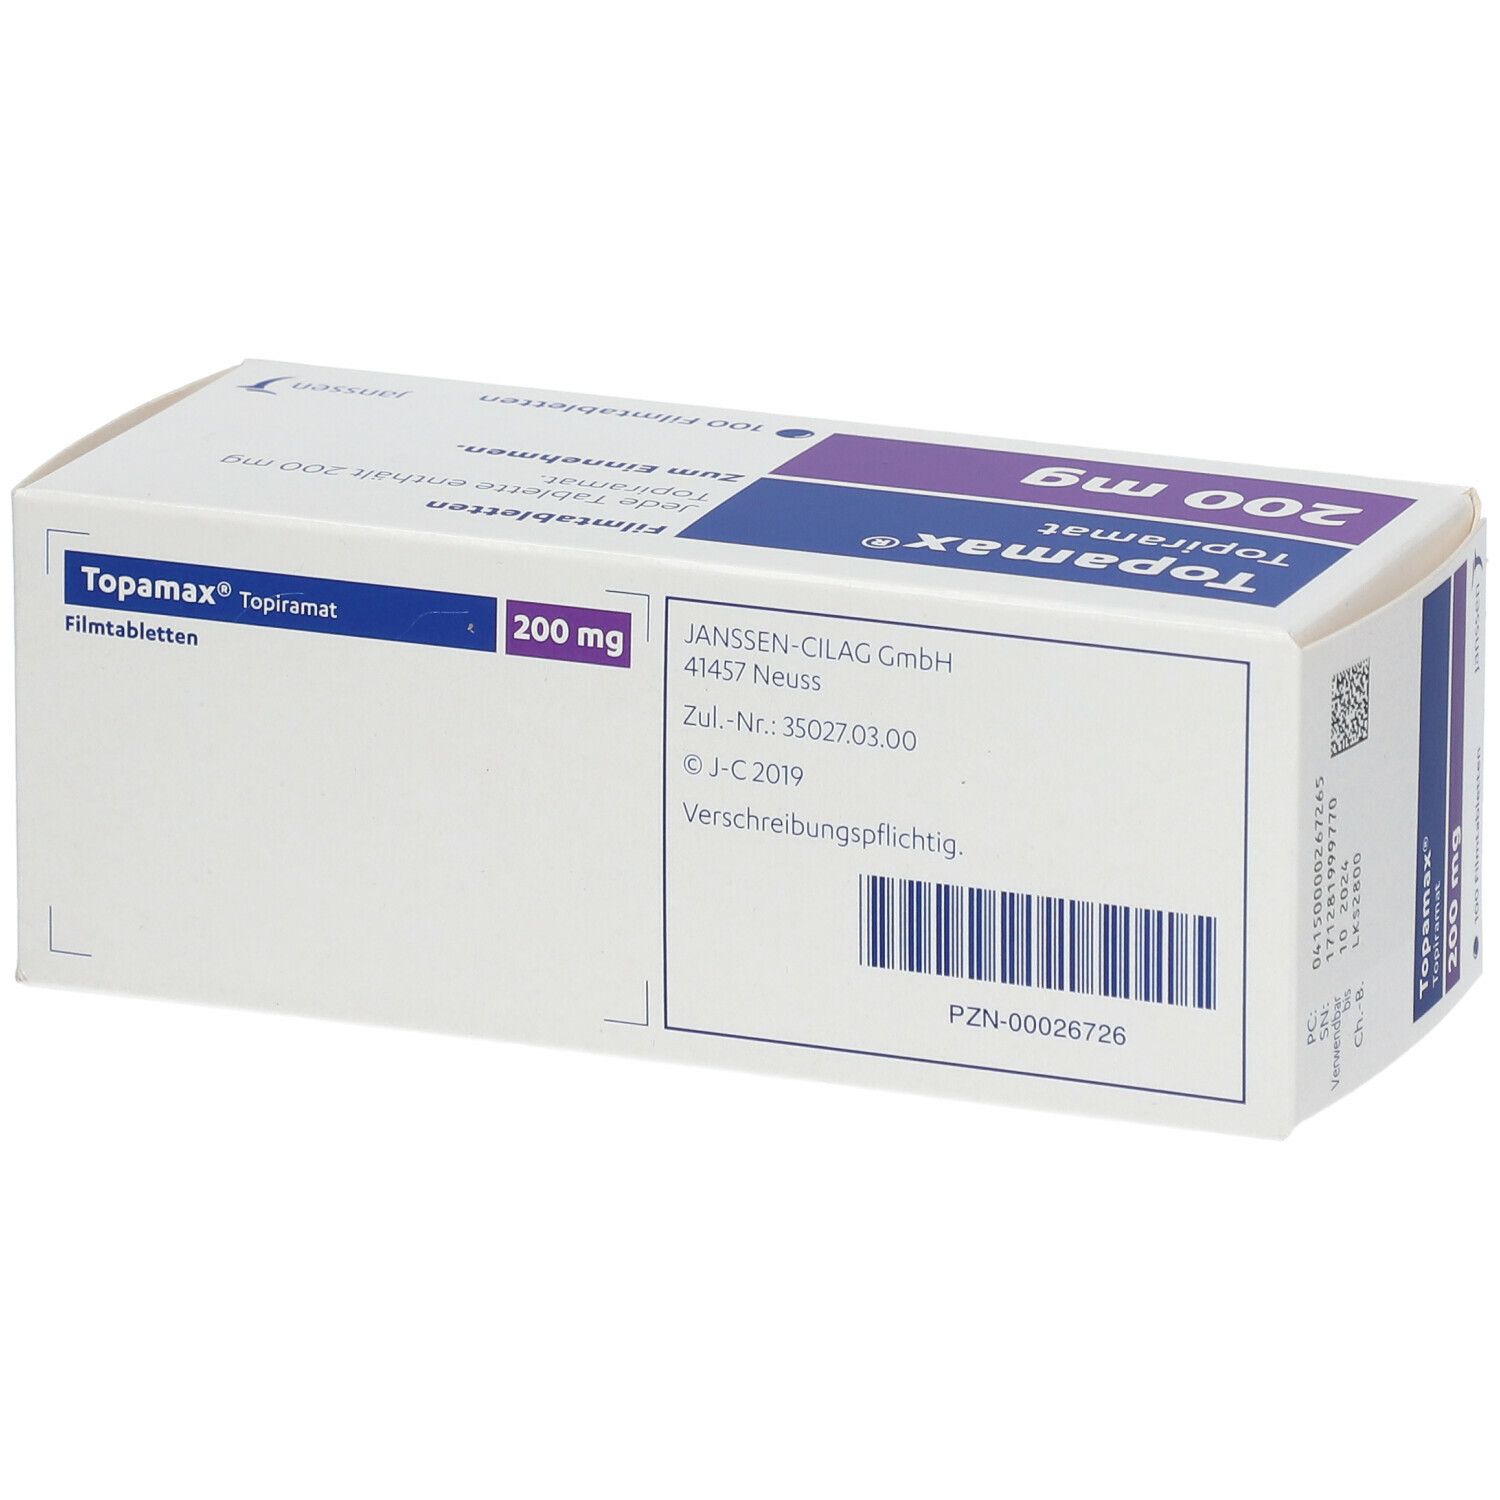 Topamax® 200 mg